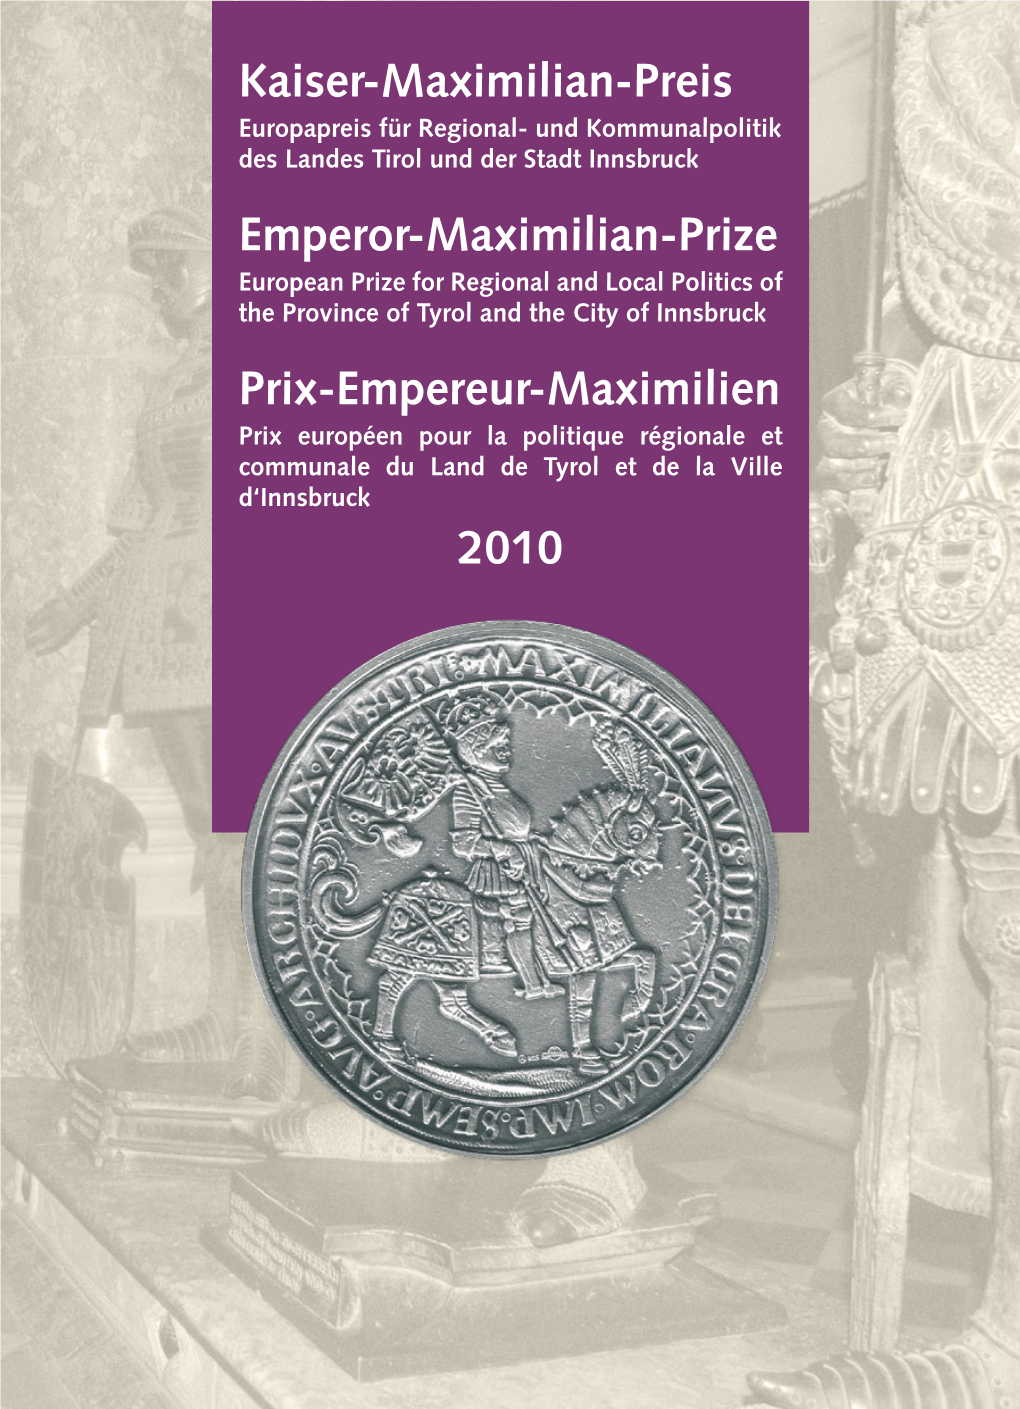 Kaiser-Maximilian-Preis